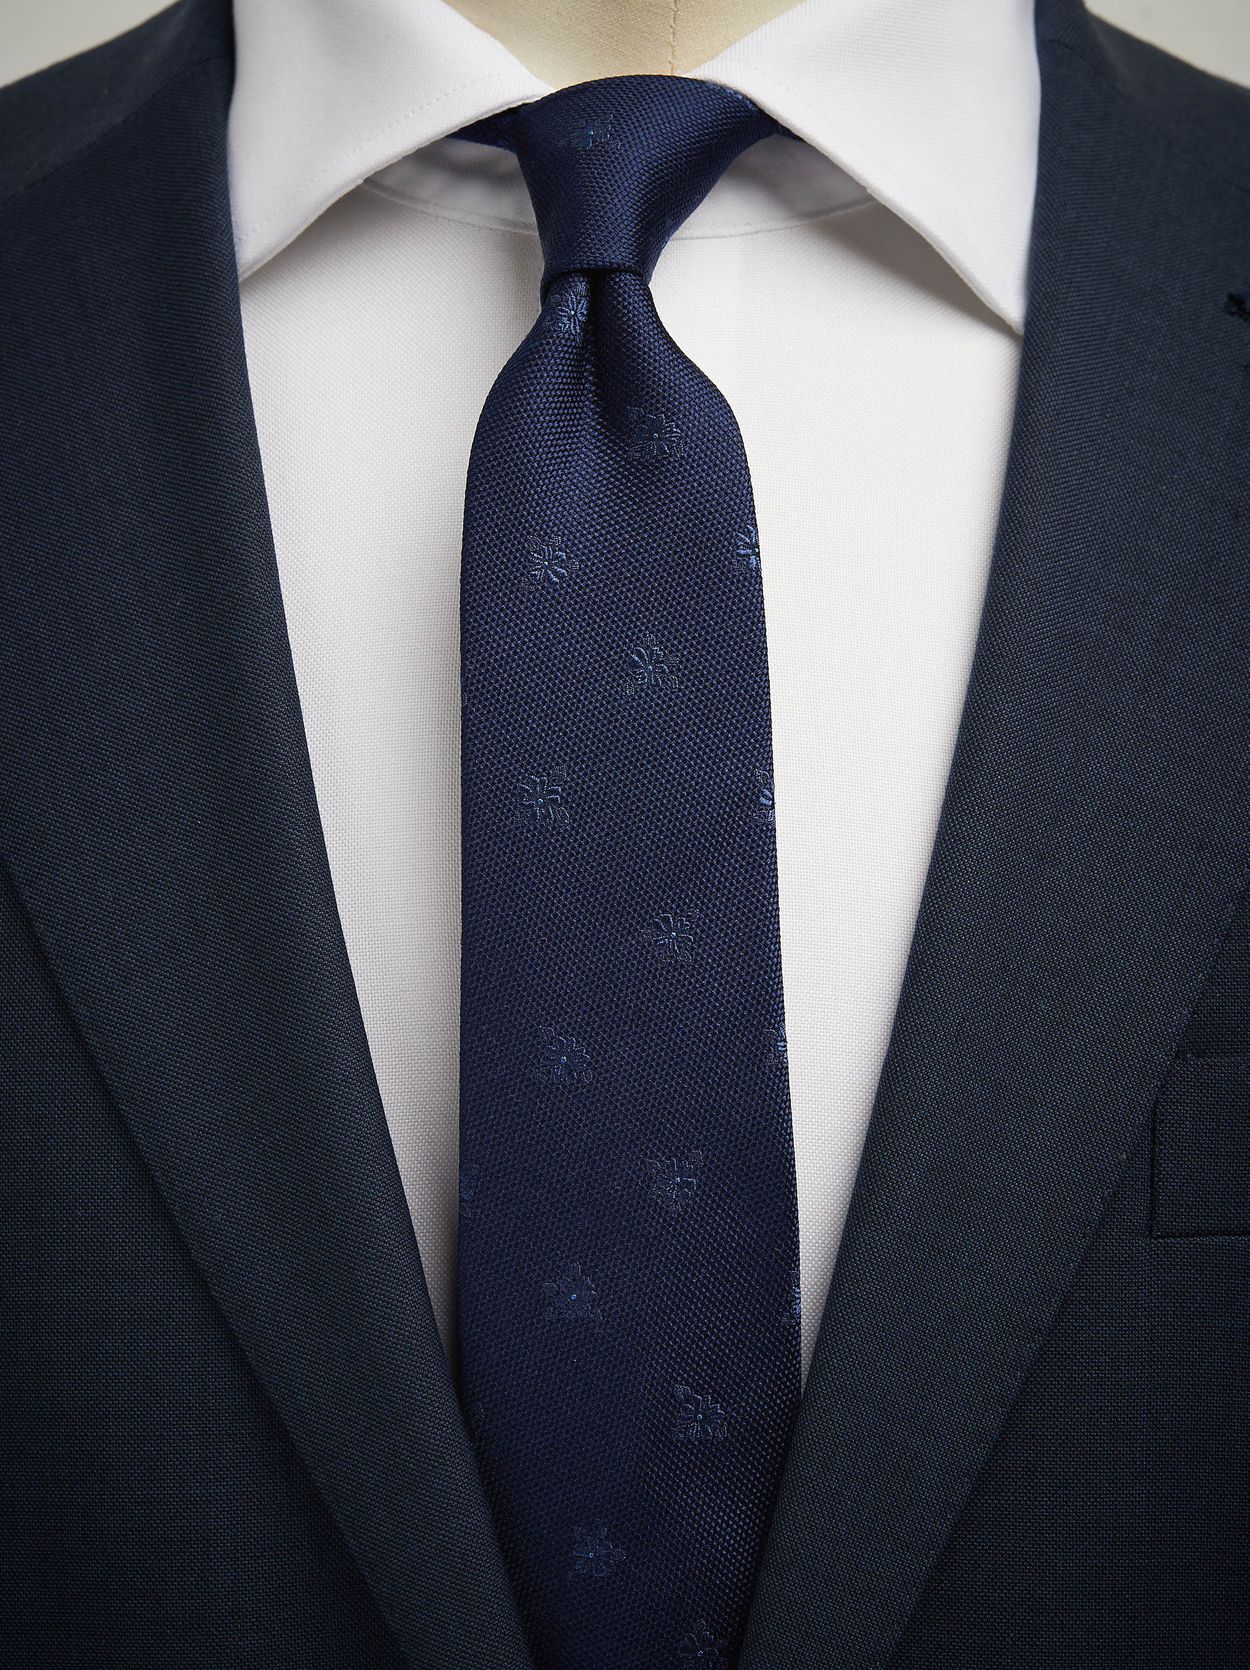 Dunkelblaue Geblümte Krawatte